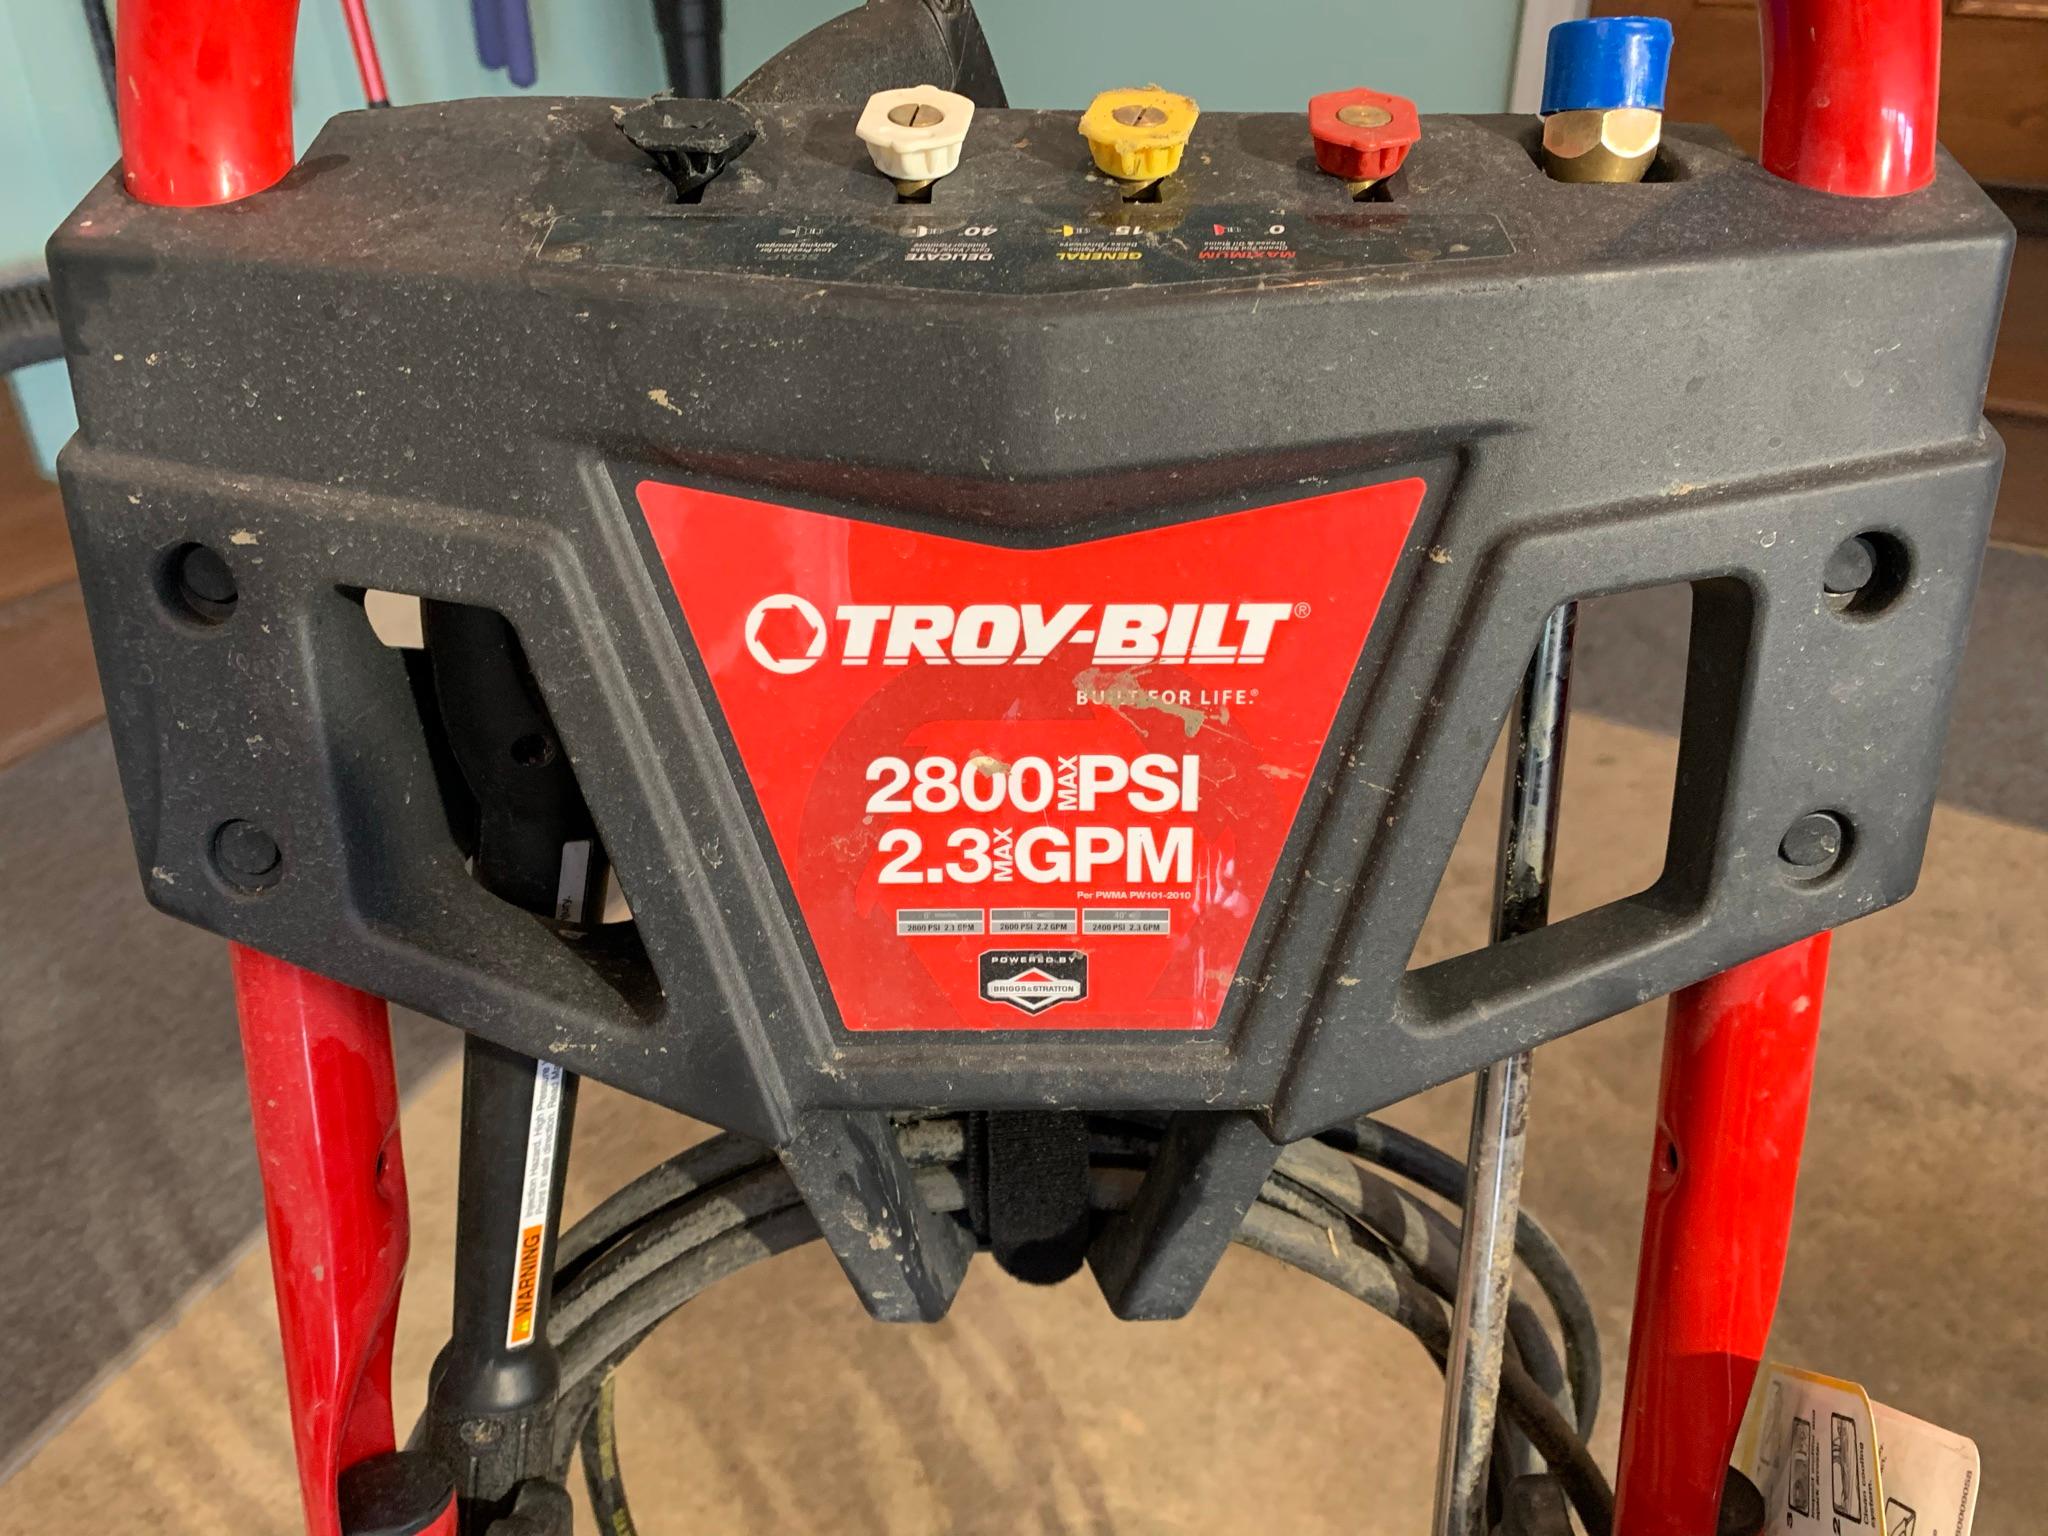 Troy-Bilt 2800 PSI Pressure Washer